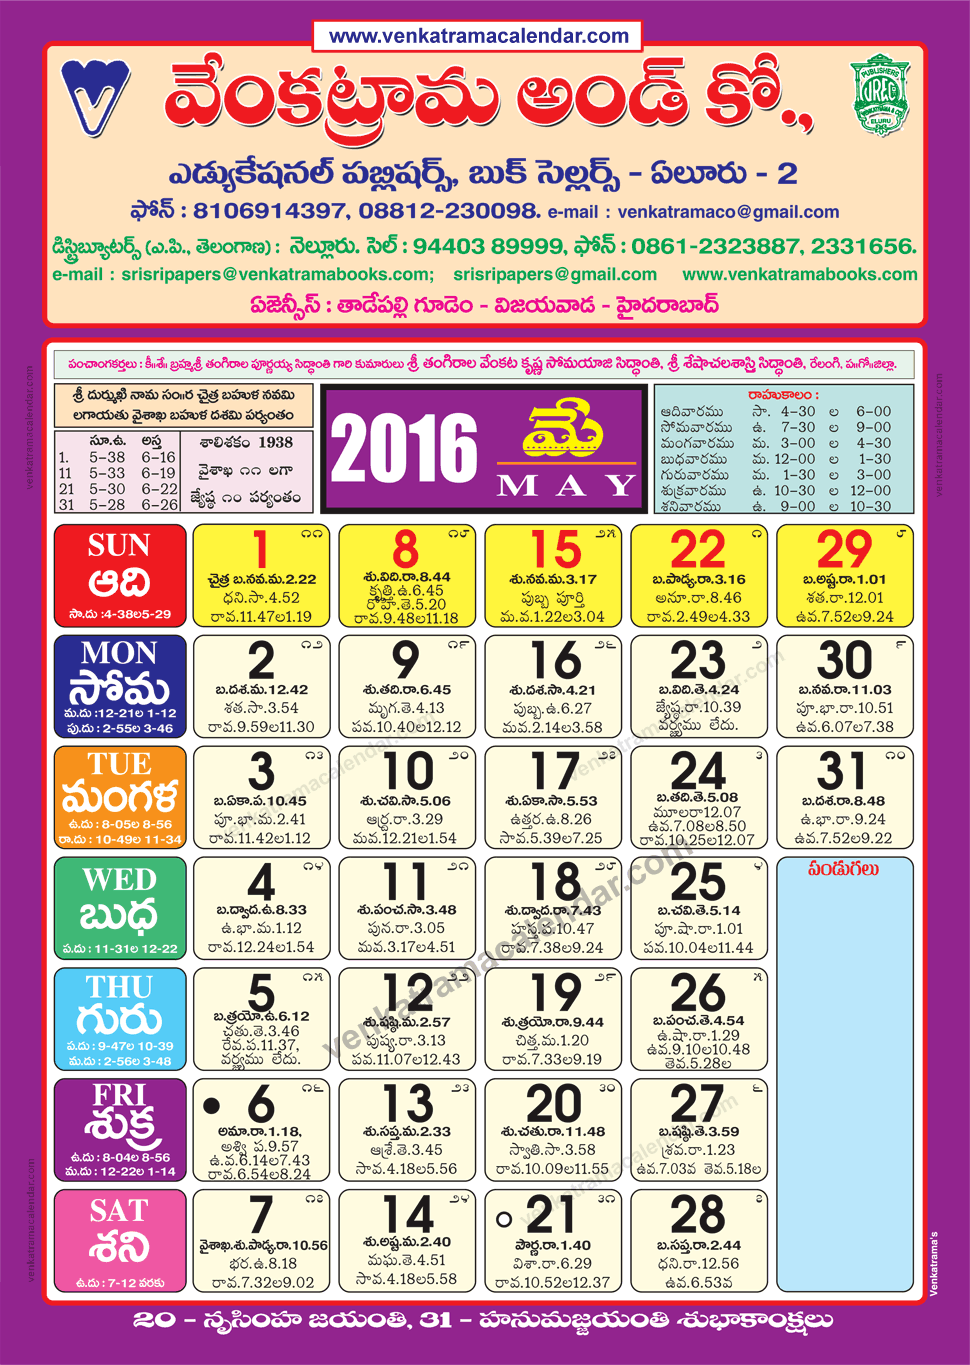 may-2016-venkatrama-co-telugu-calendar-colour-venkatrama-telugu